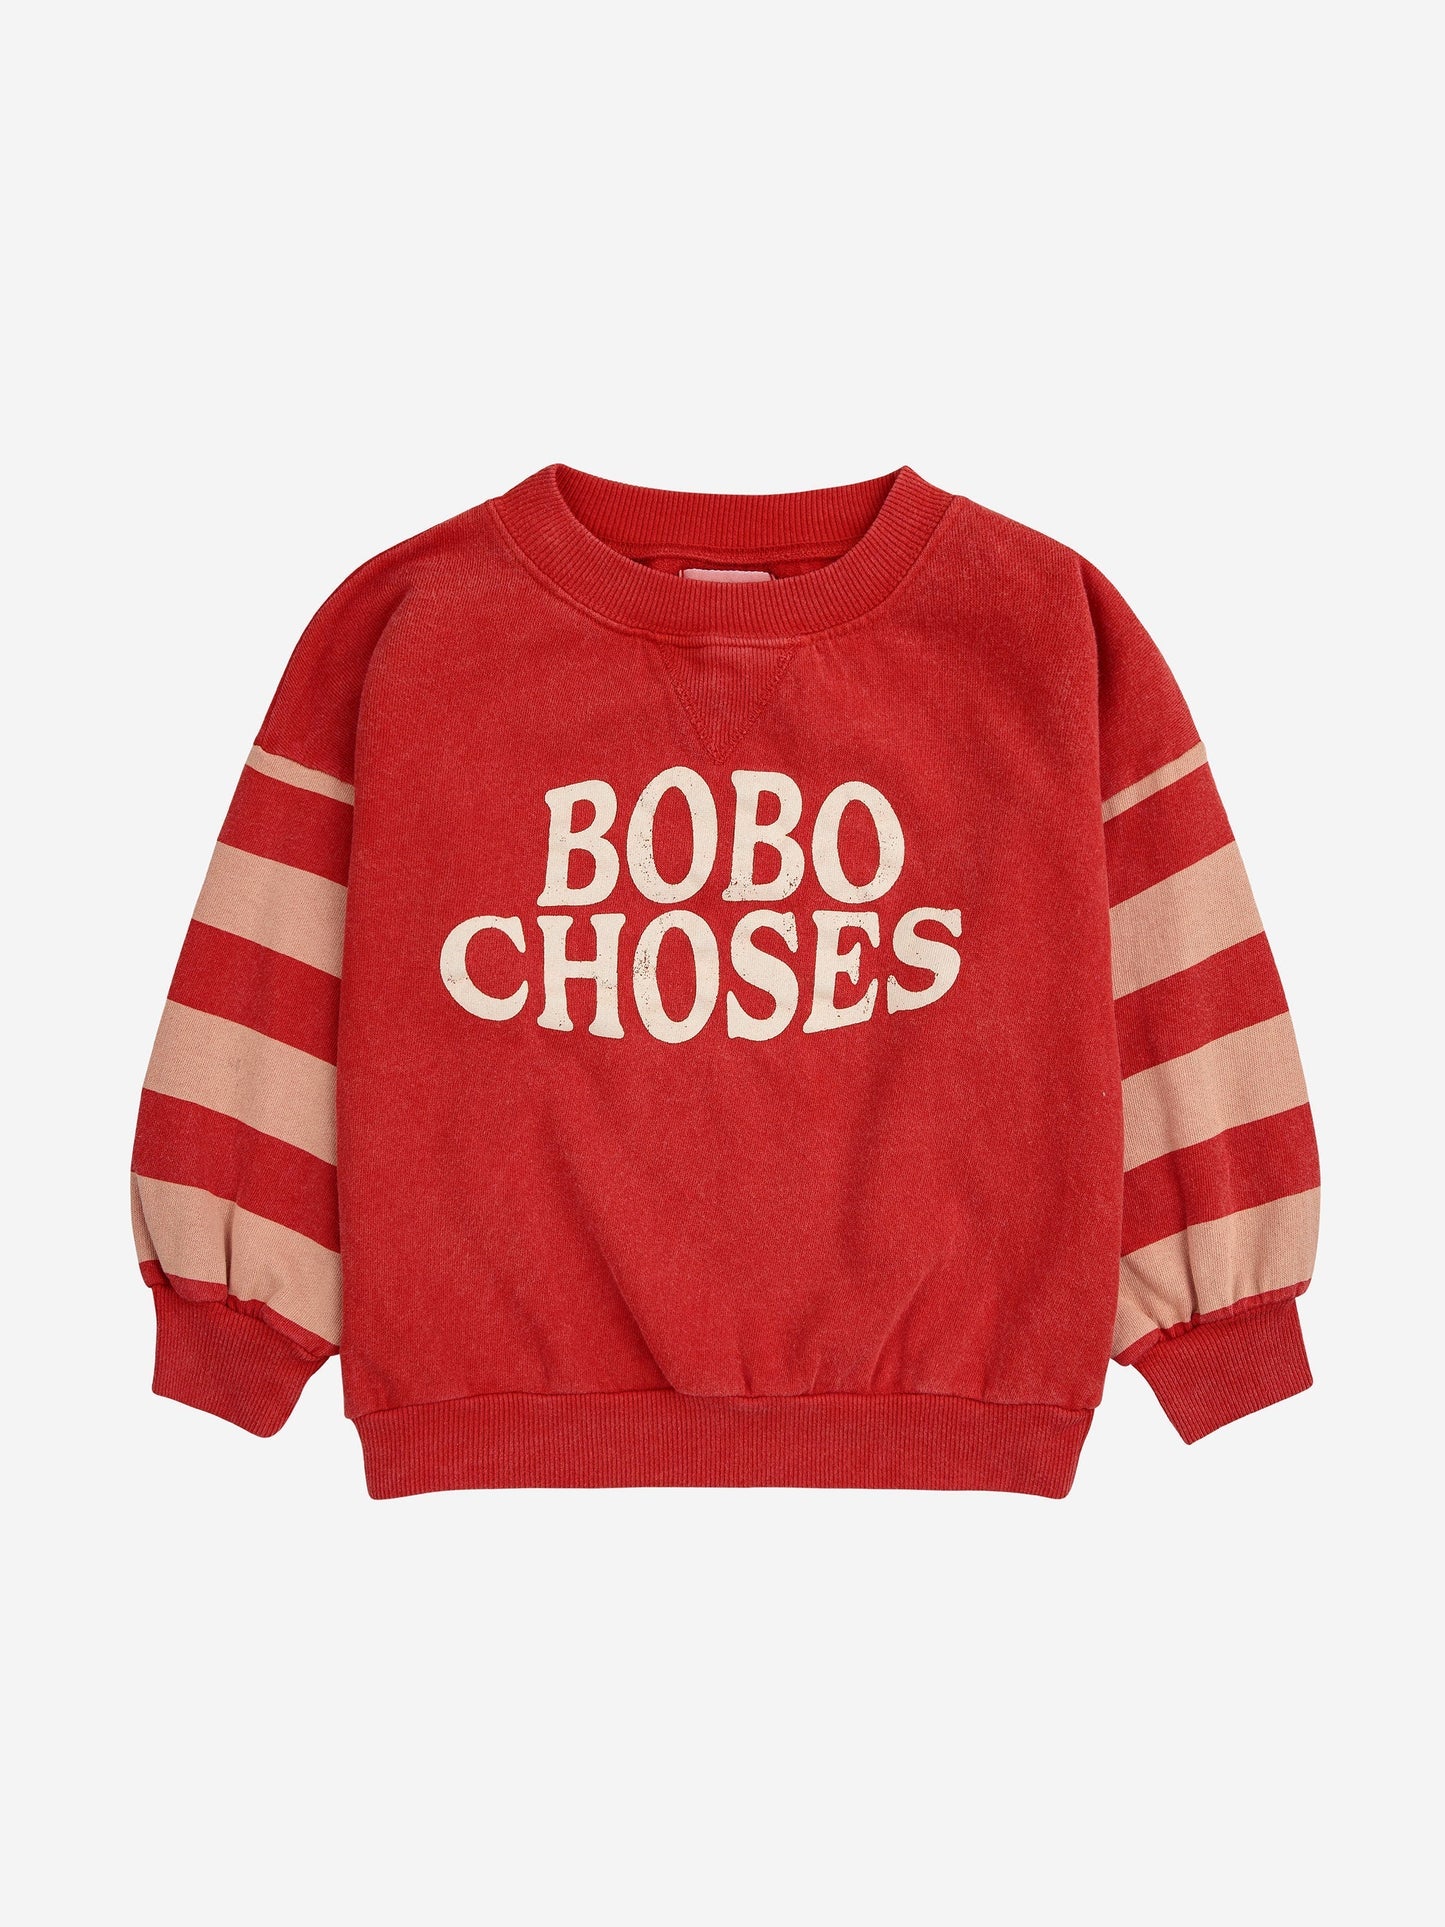 Bobo Choses stripes Sweatshirts